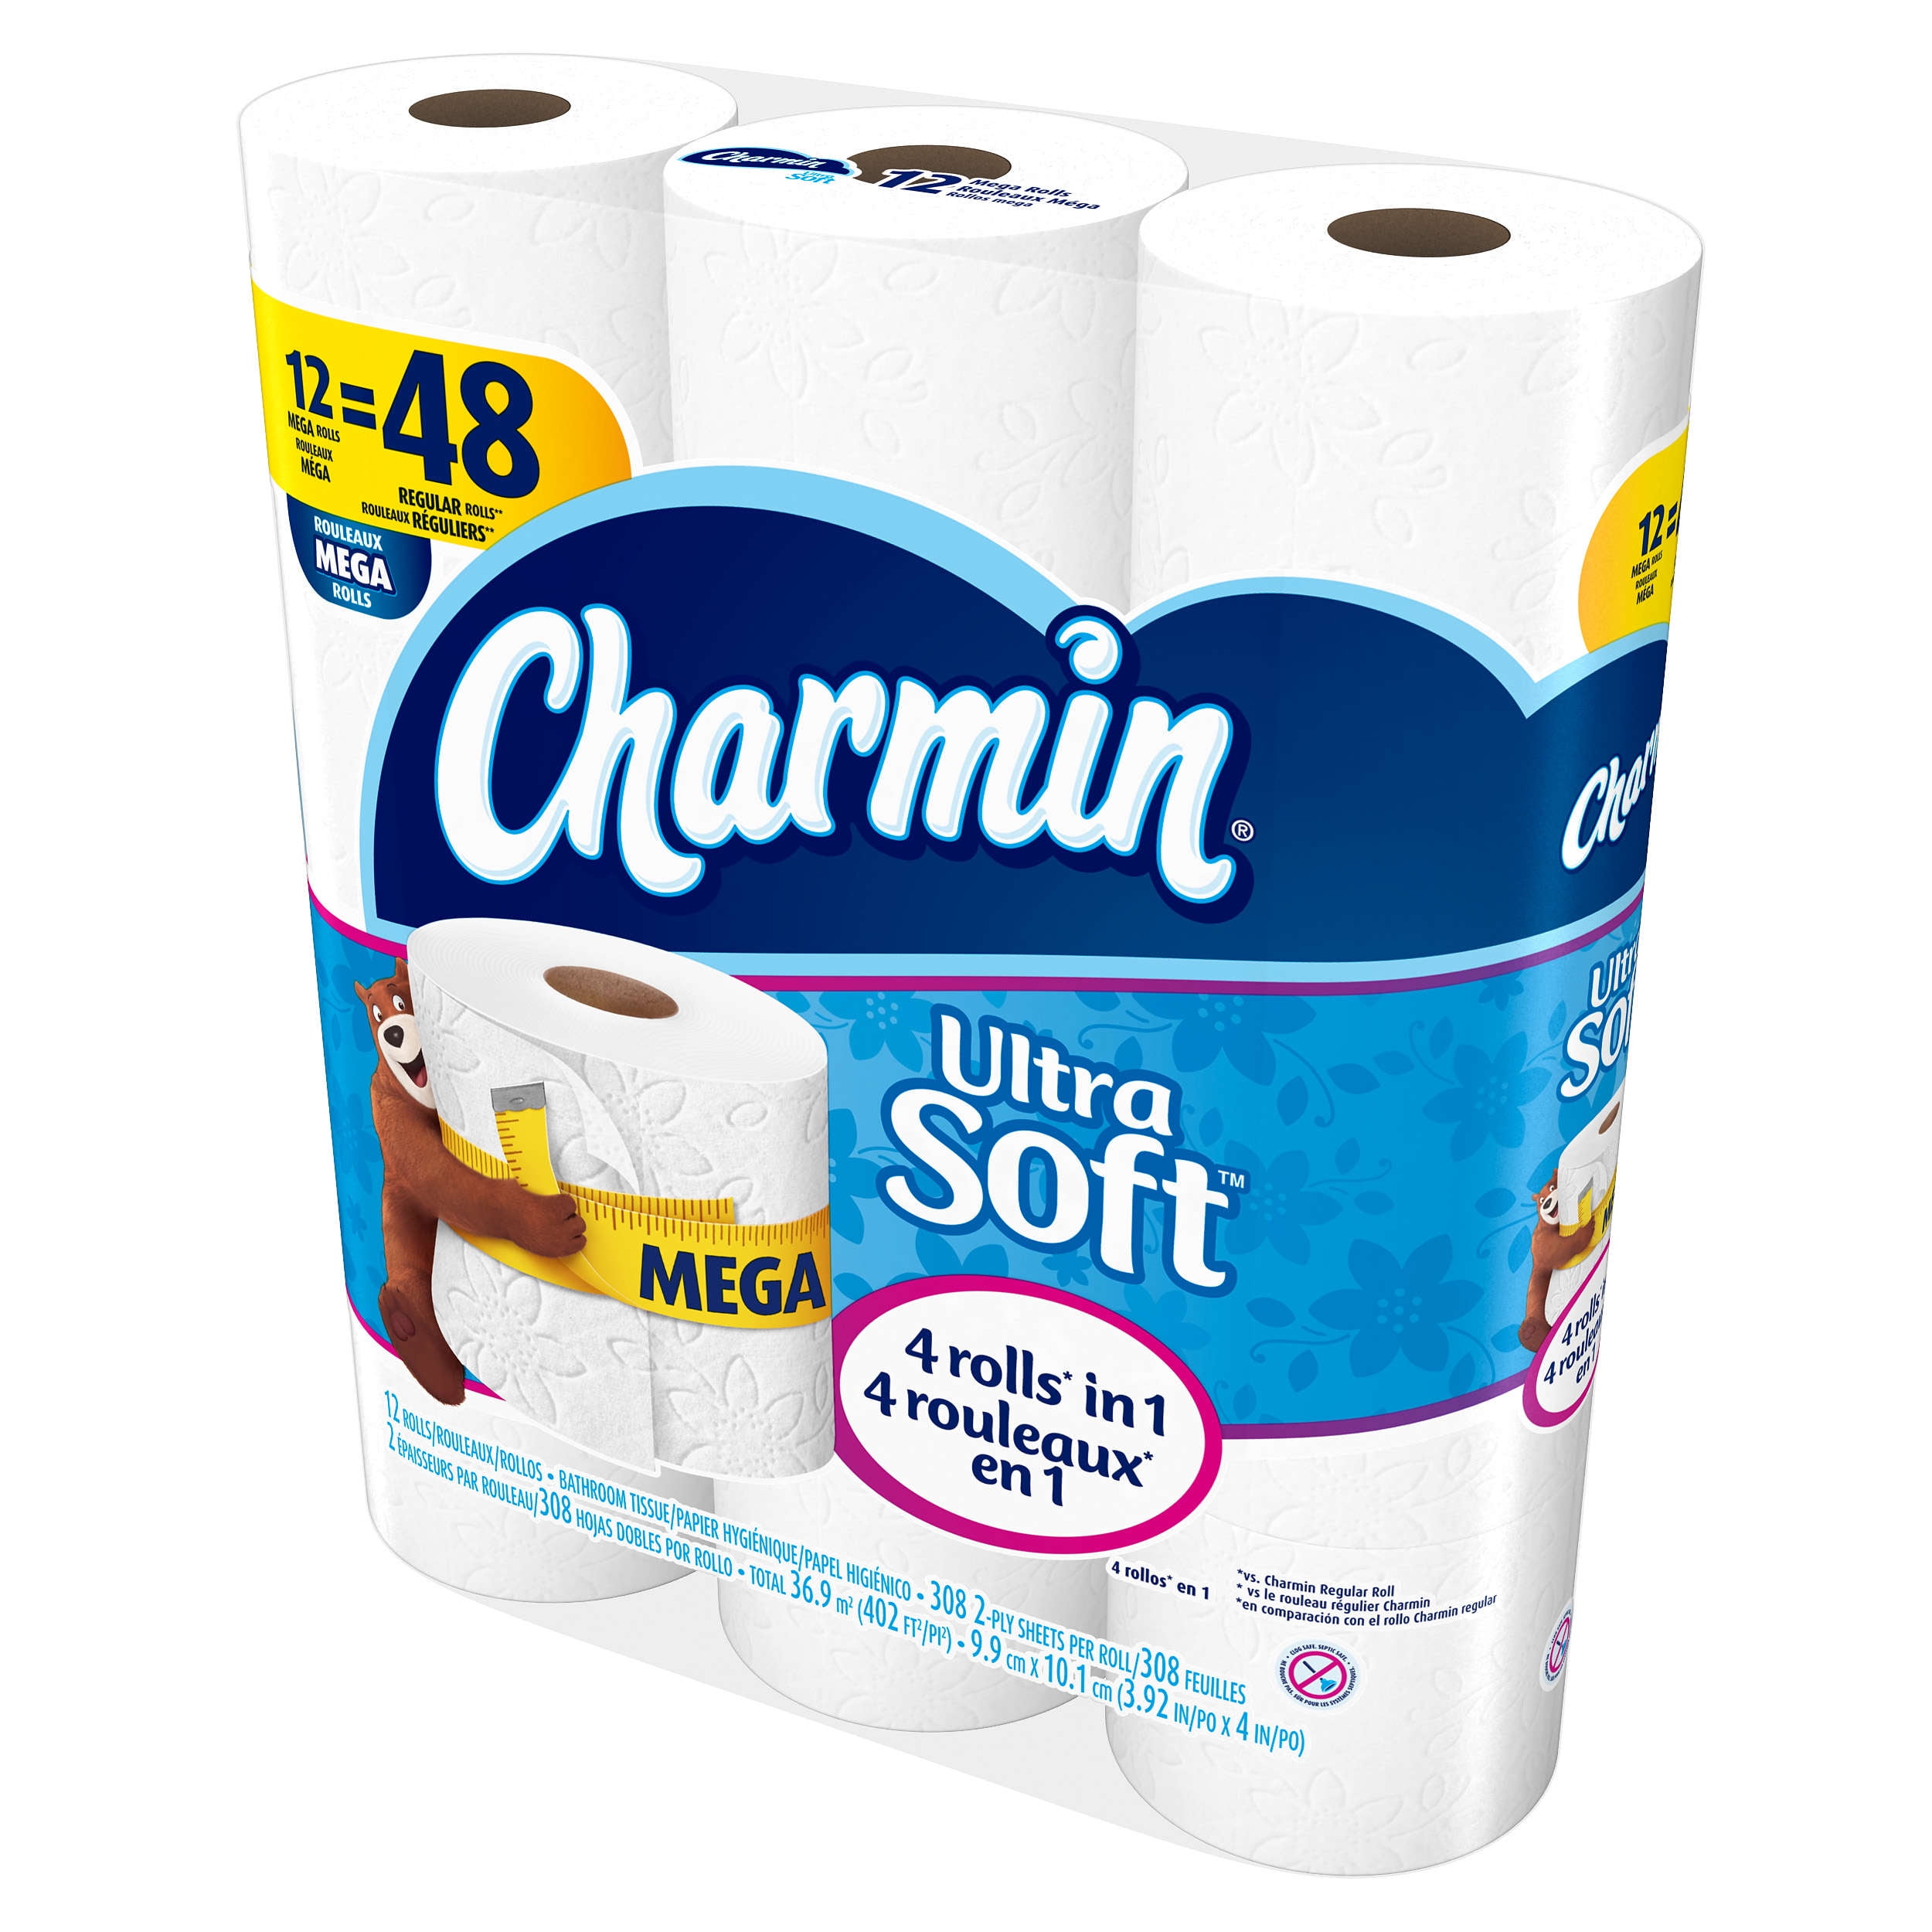 Colhogar toilet paper (12 U)